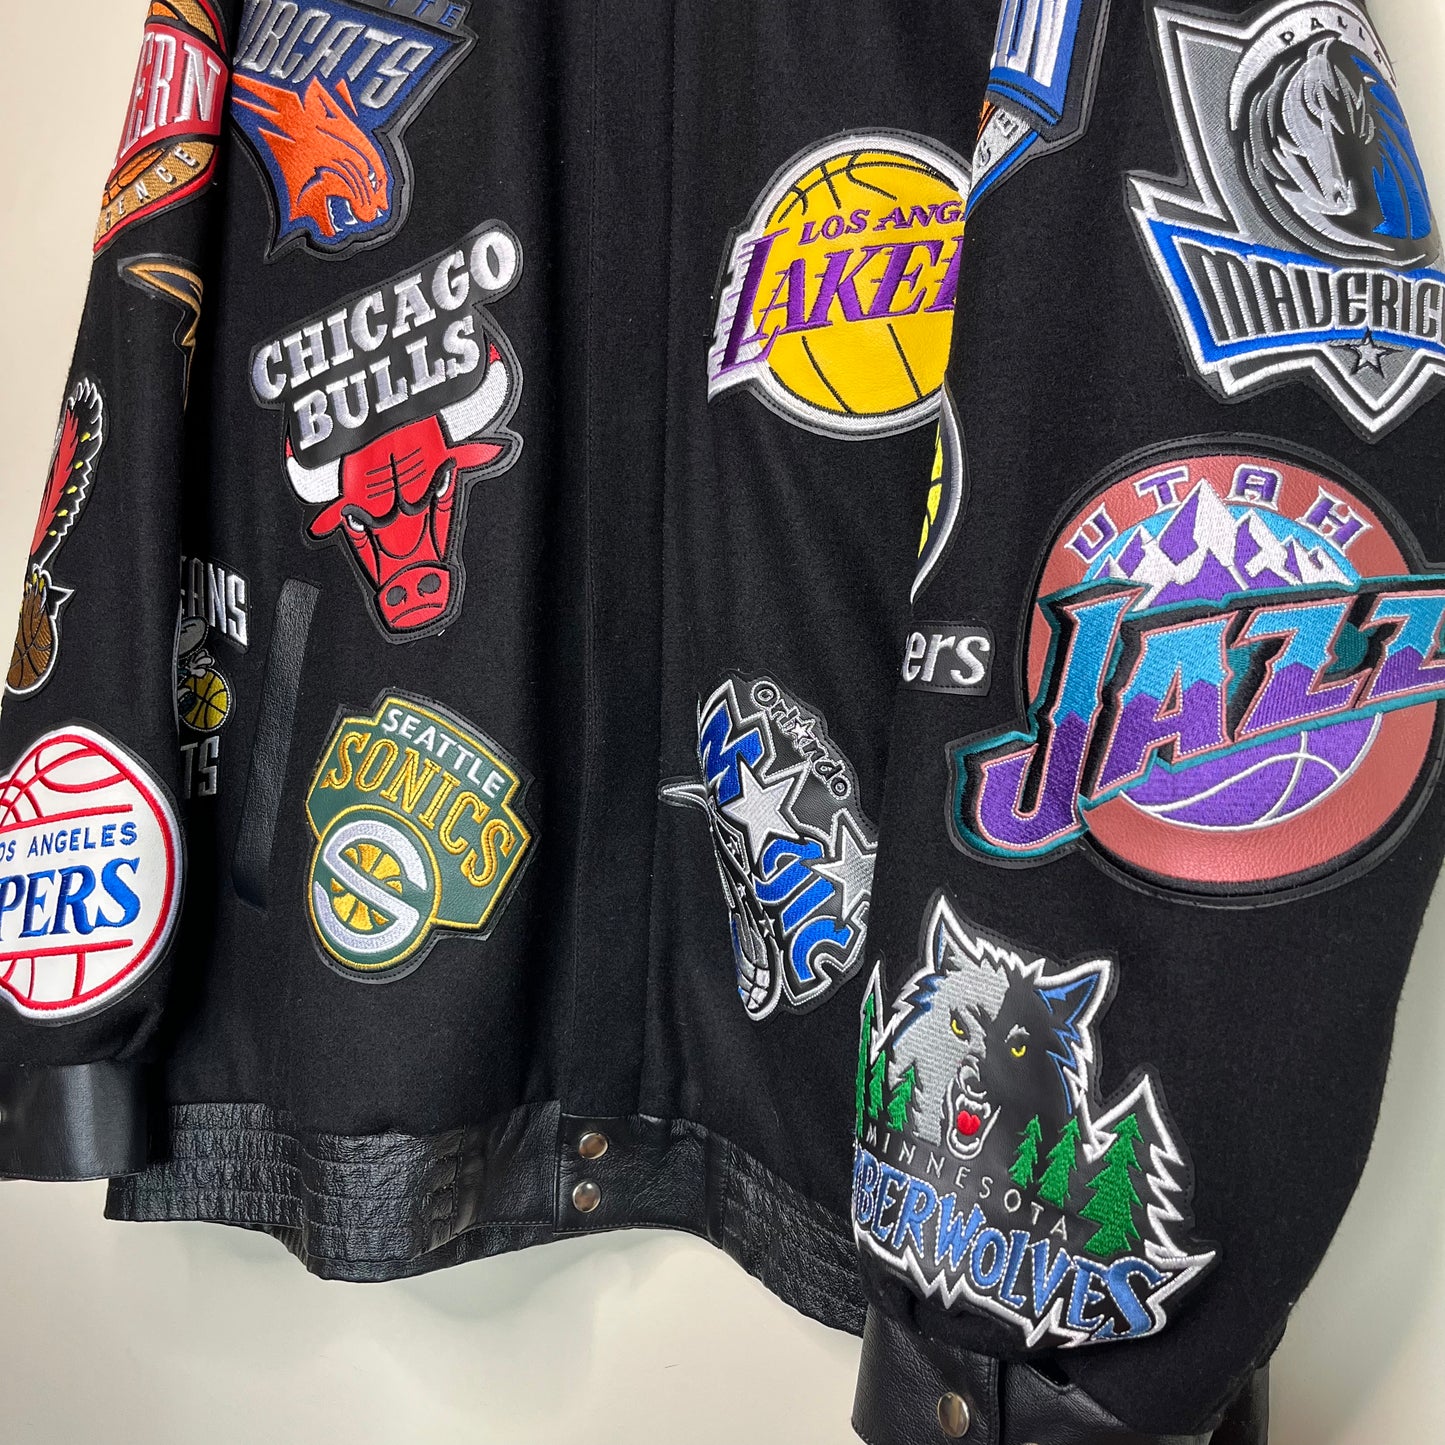 Vintage NBA Patch Hardwood Classics Jacket